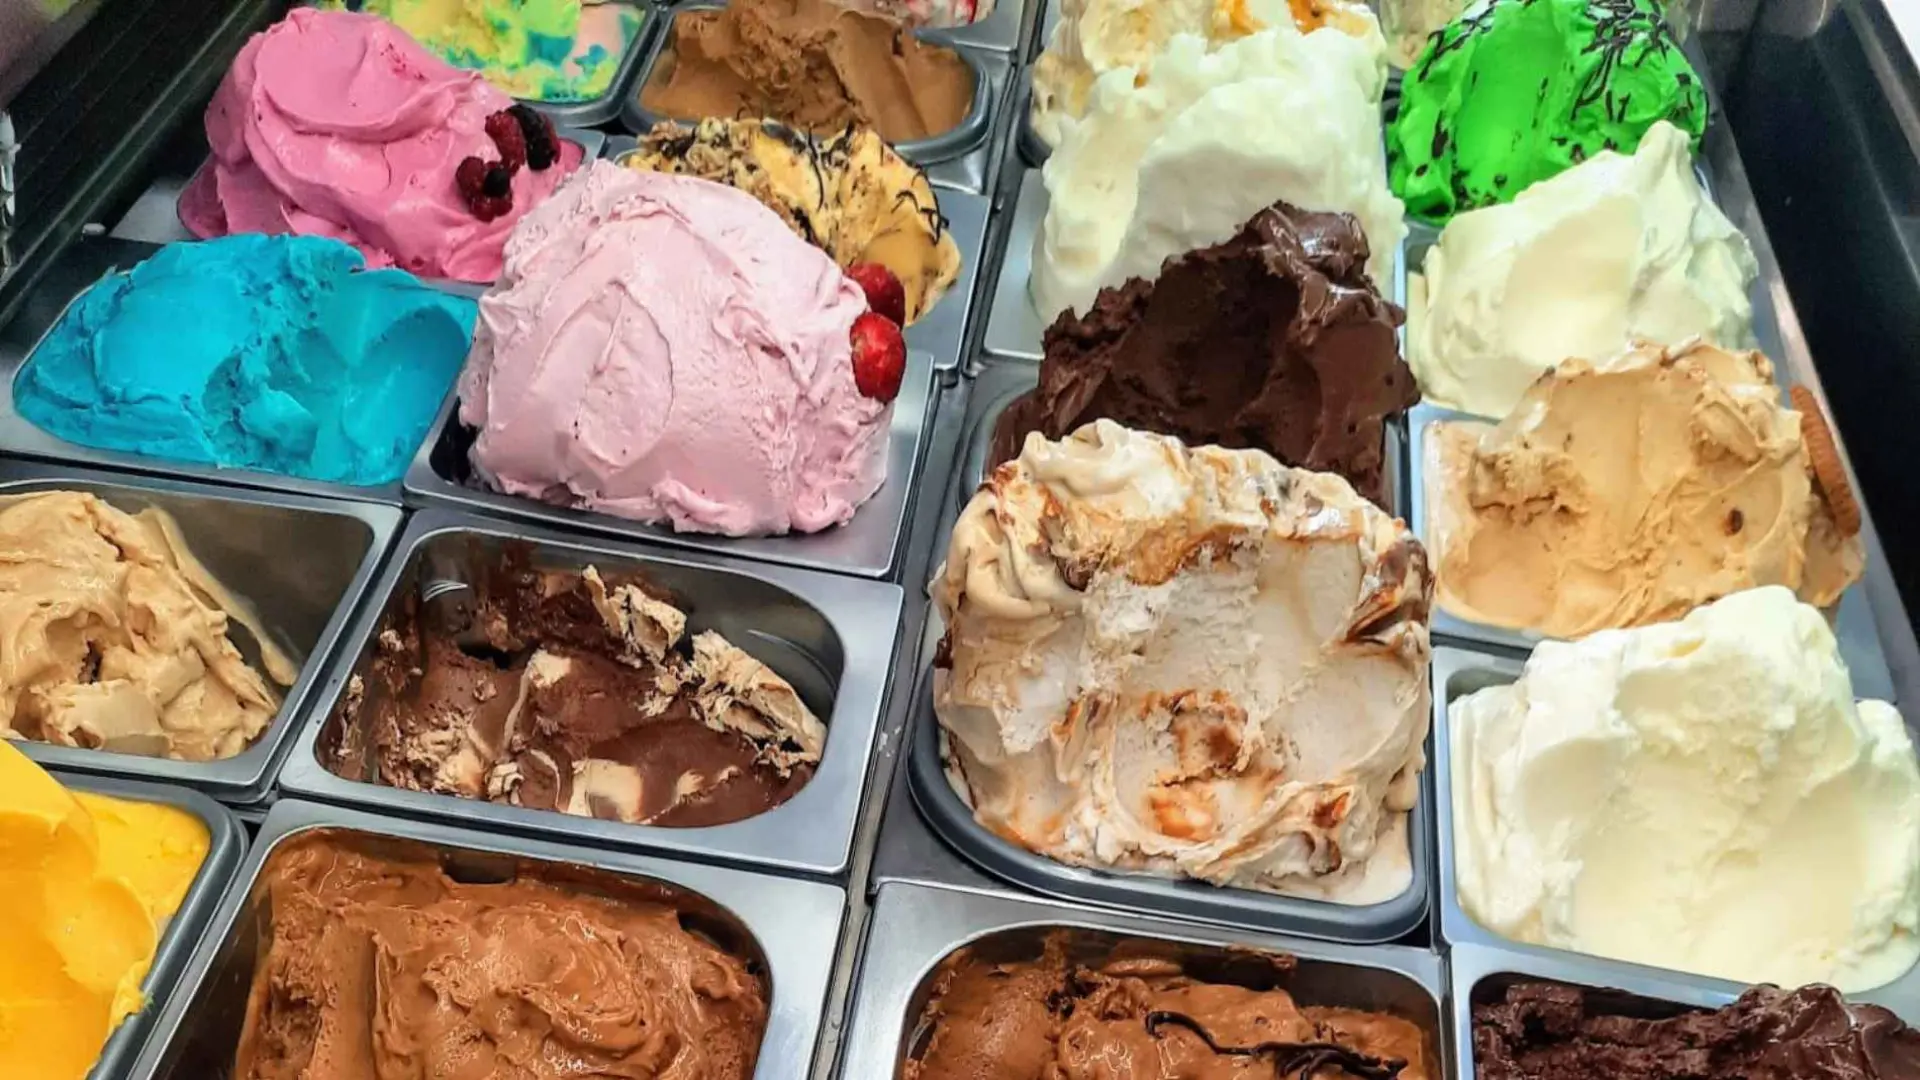 Traditional ice cream shop in Las Fuentes de Zaragoza with more than 50 ice cream flavours.